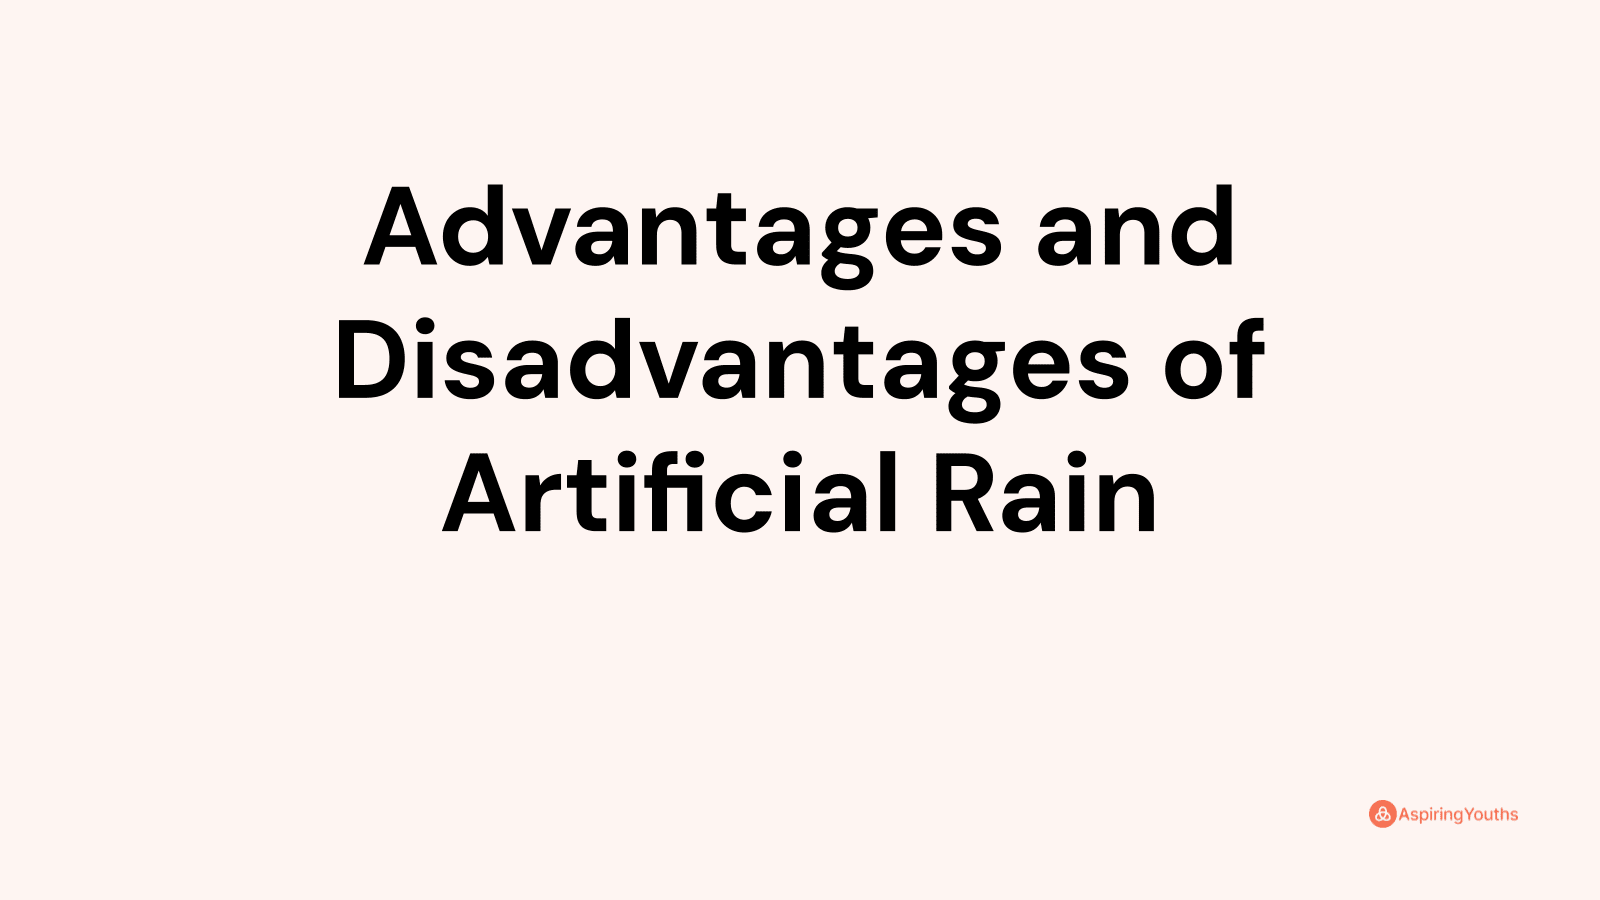 Advantages and disadvantages of Artificial Rain